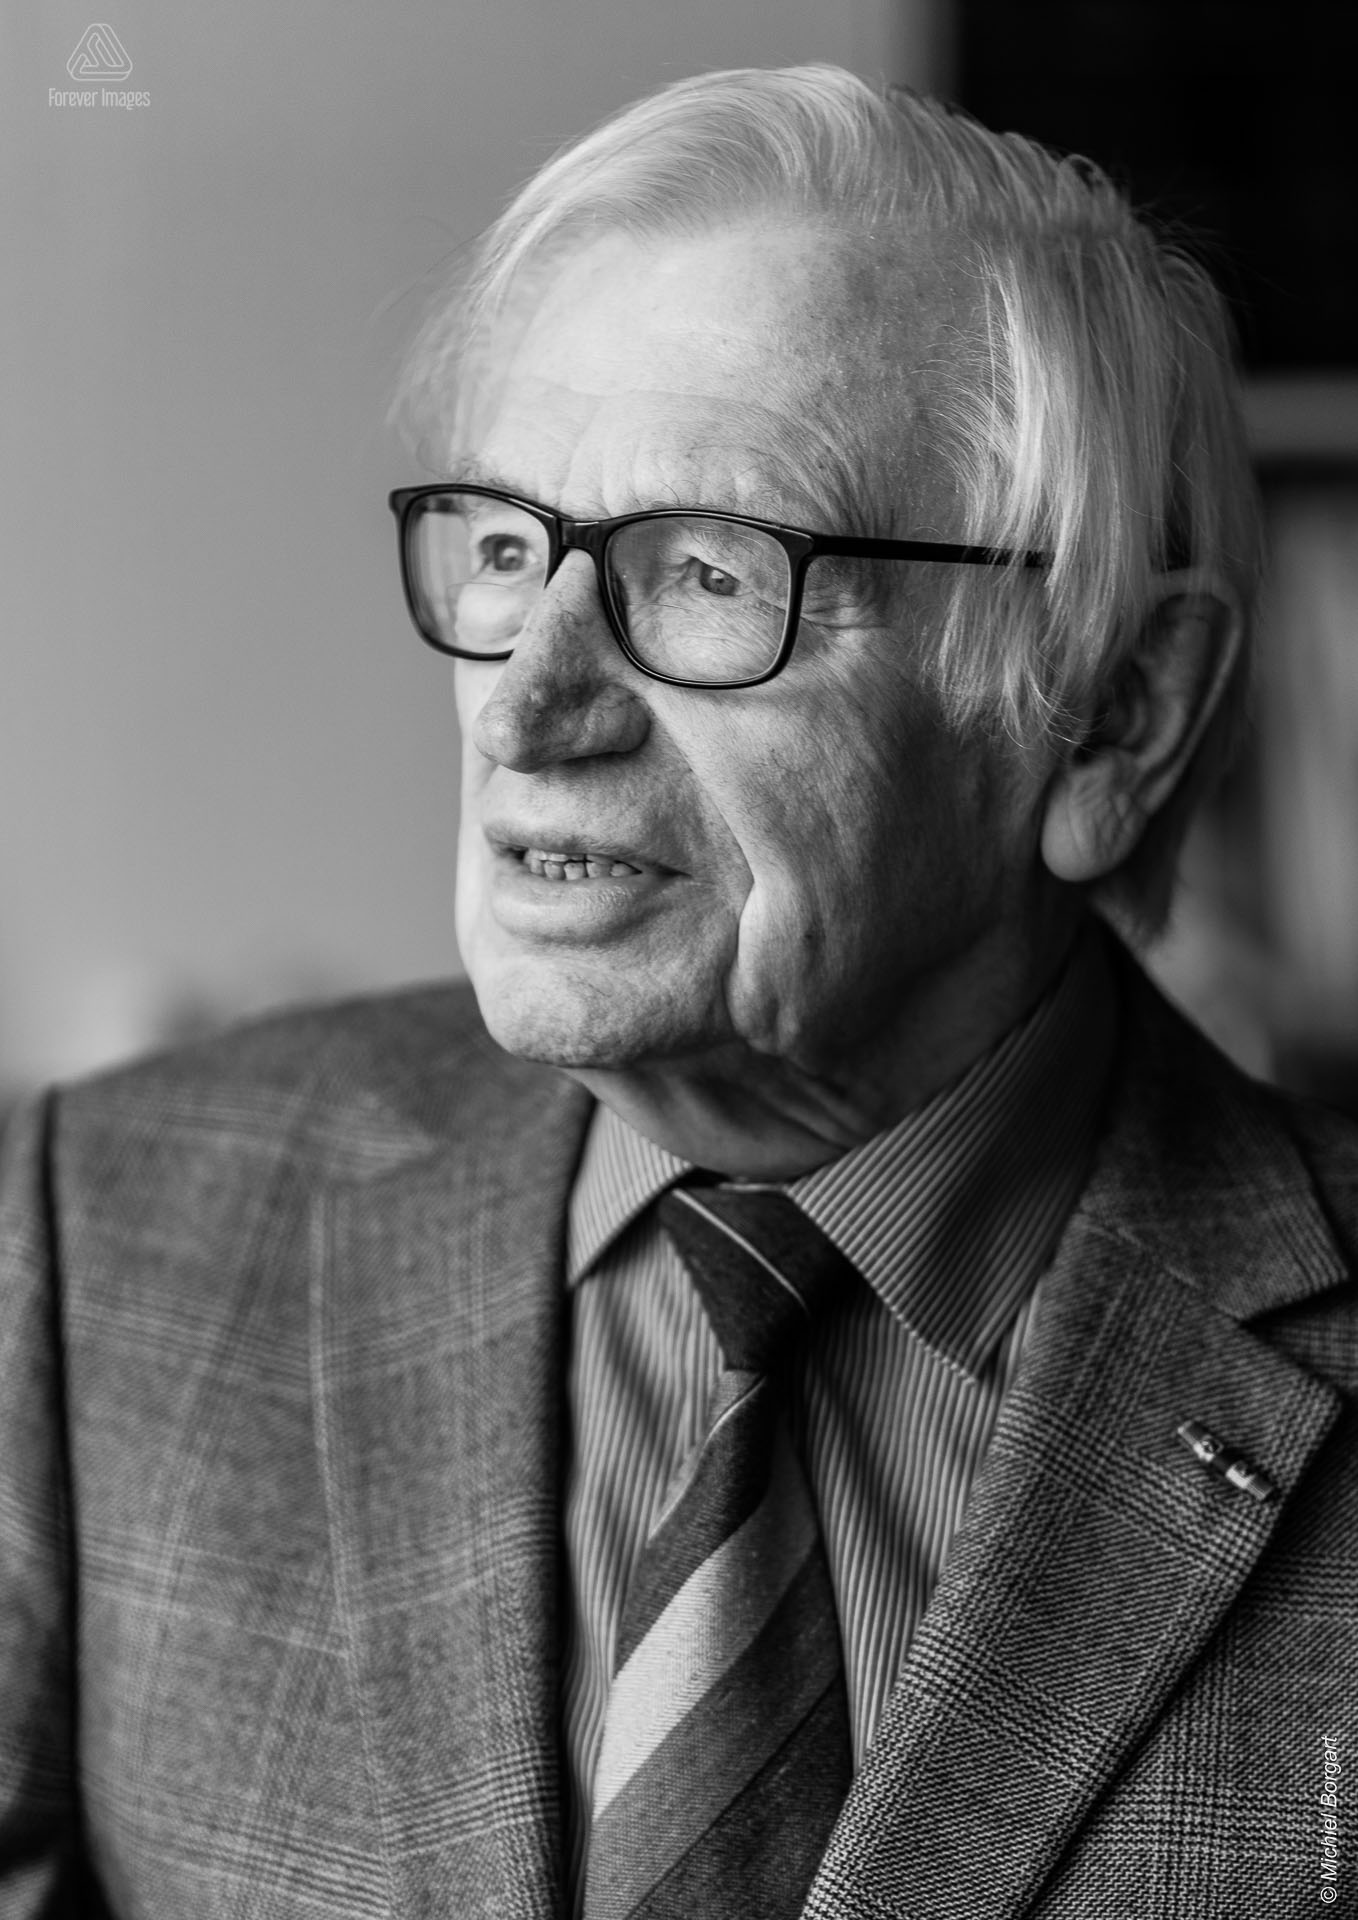 Portrait photo black and white B&W oldest male Mensa member 2018 HiQ Magazine | Frans van Altvorst | Portrait Photographer Michiel Borgart - Forever Images.